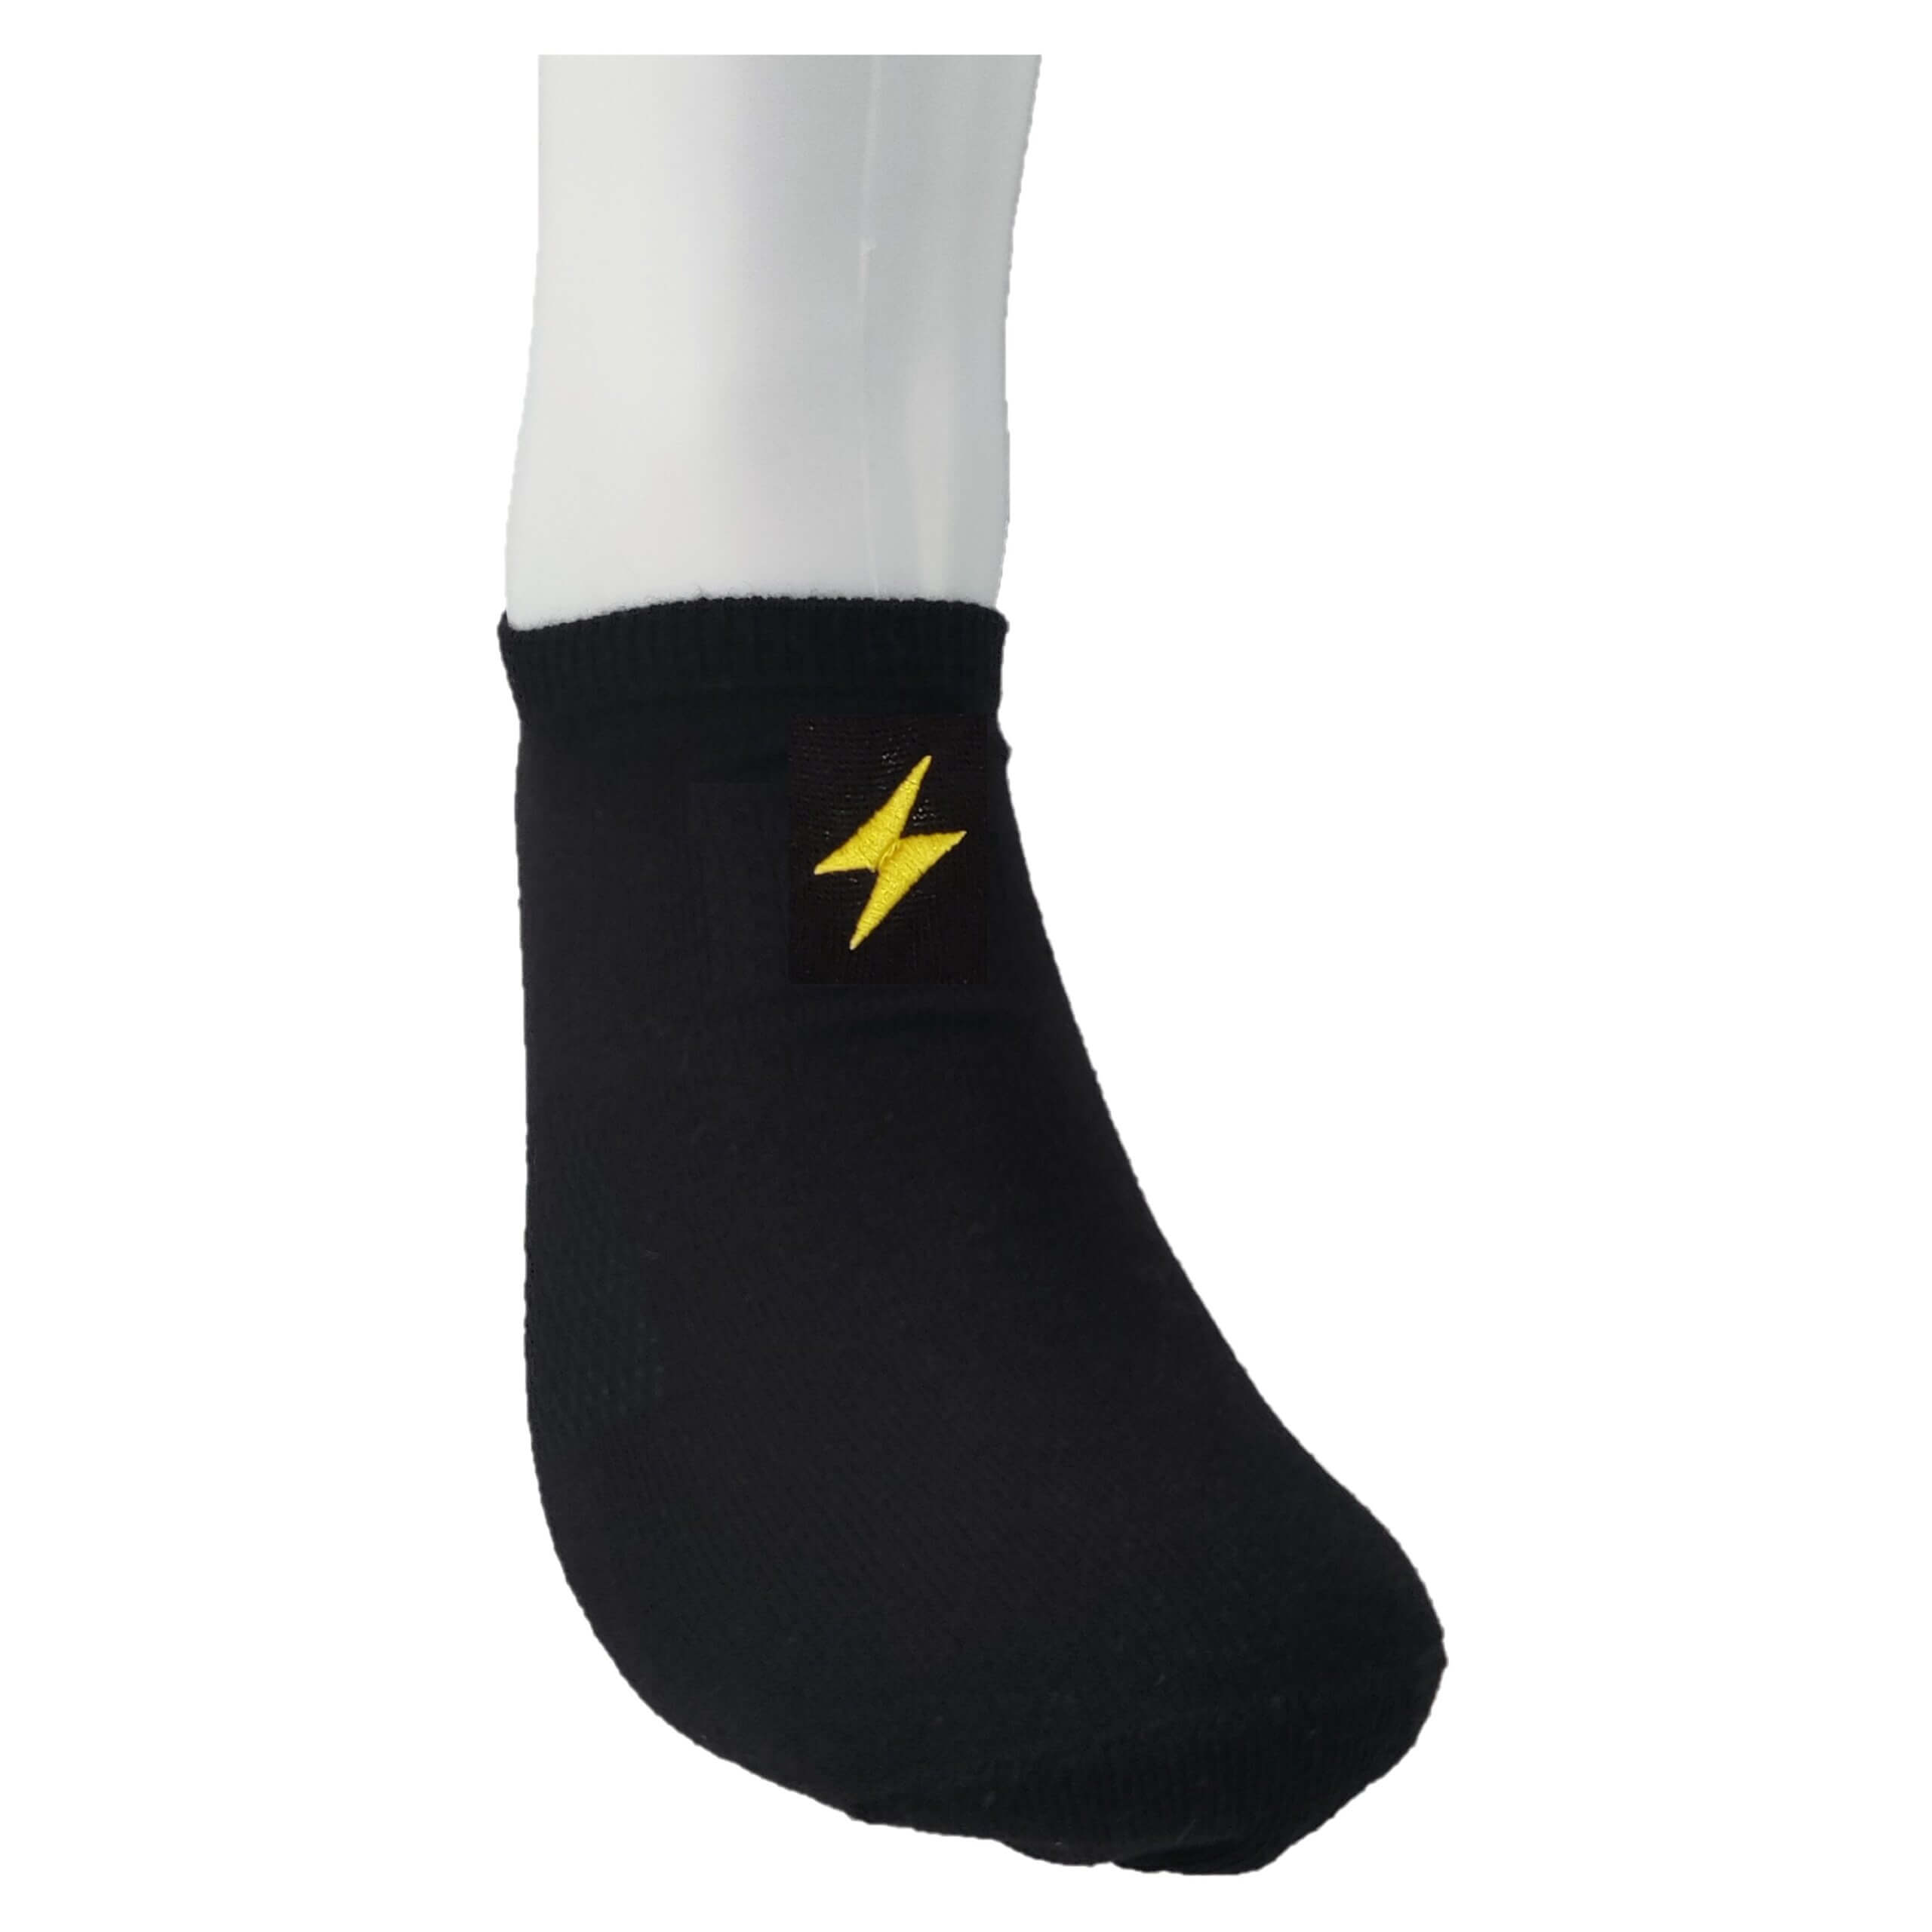 1 Paar Bitcoin Lightning-Sneaker-Socken in deiner Wunschfarbe bestickt